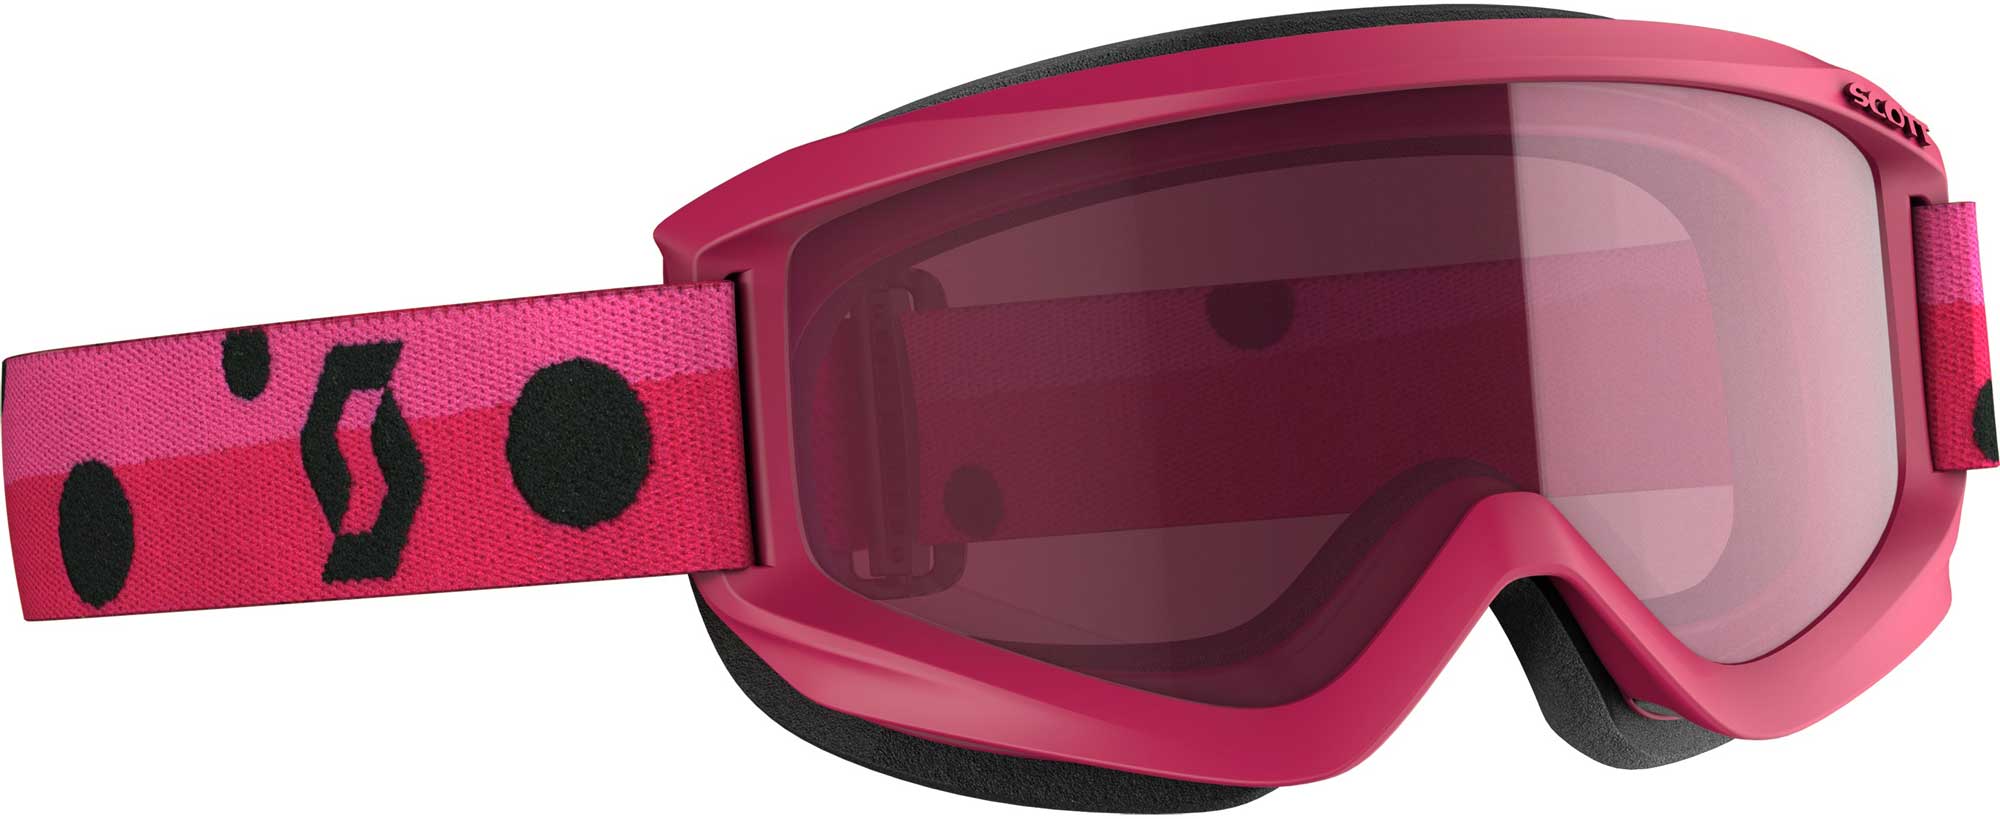 Kids’ ski goggles